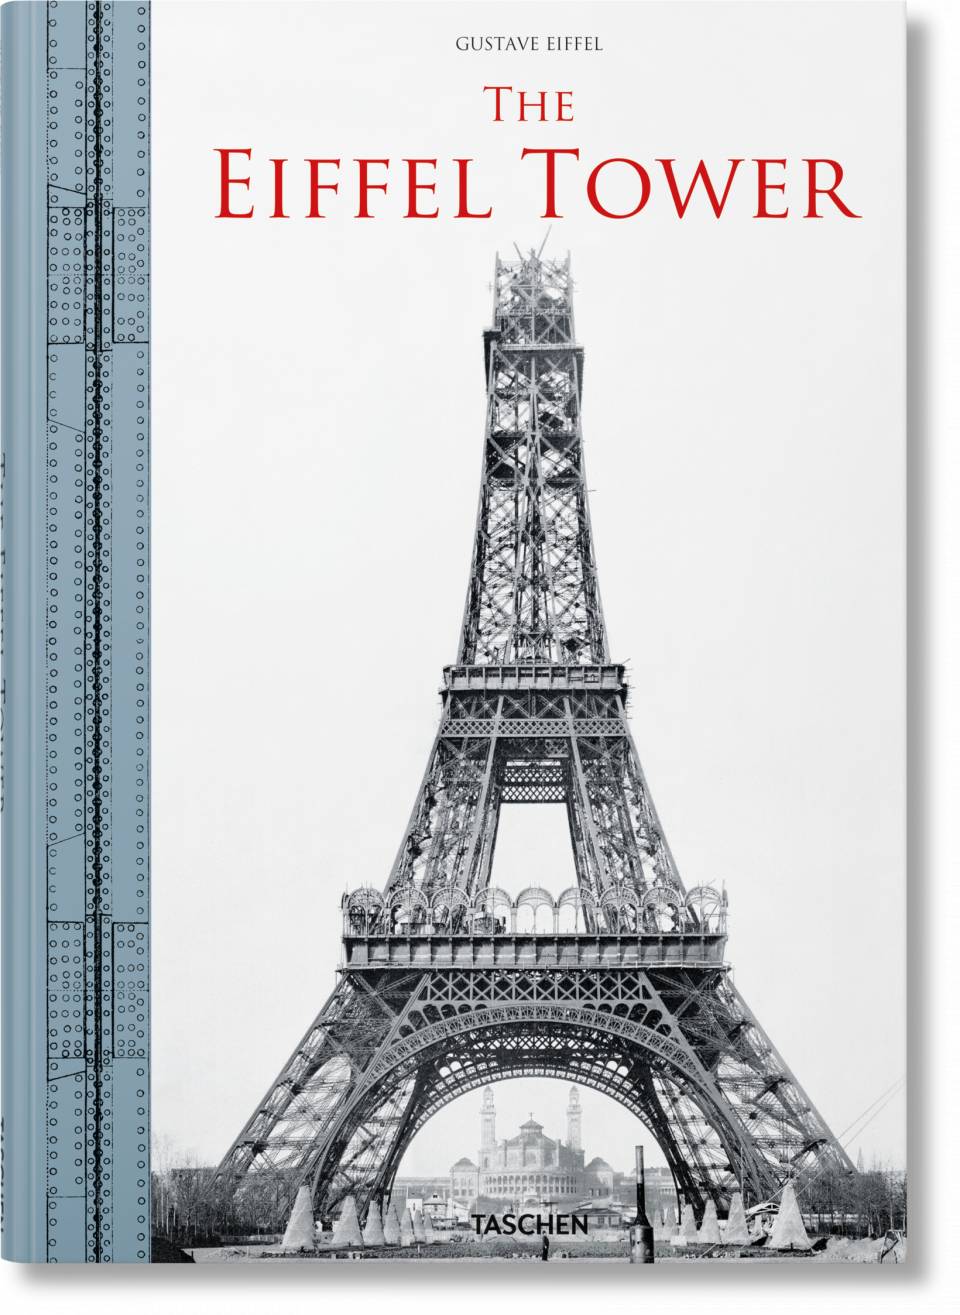 The Eiffel Tower. PRE-ORDER